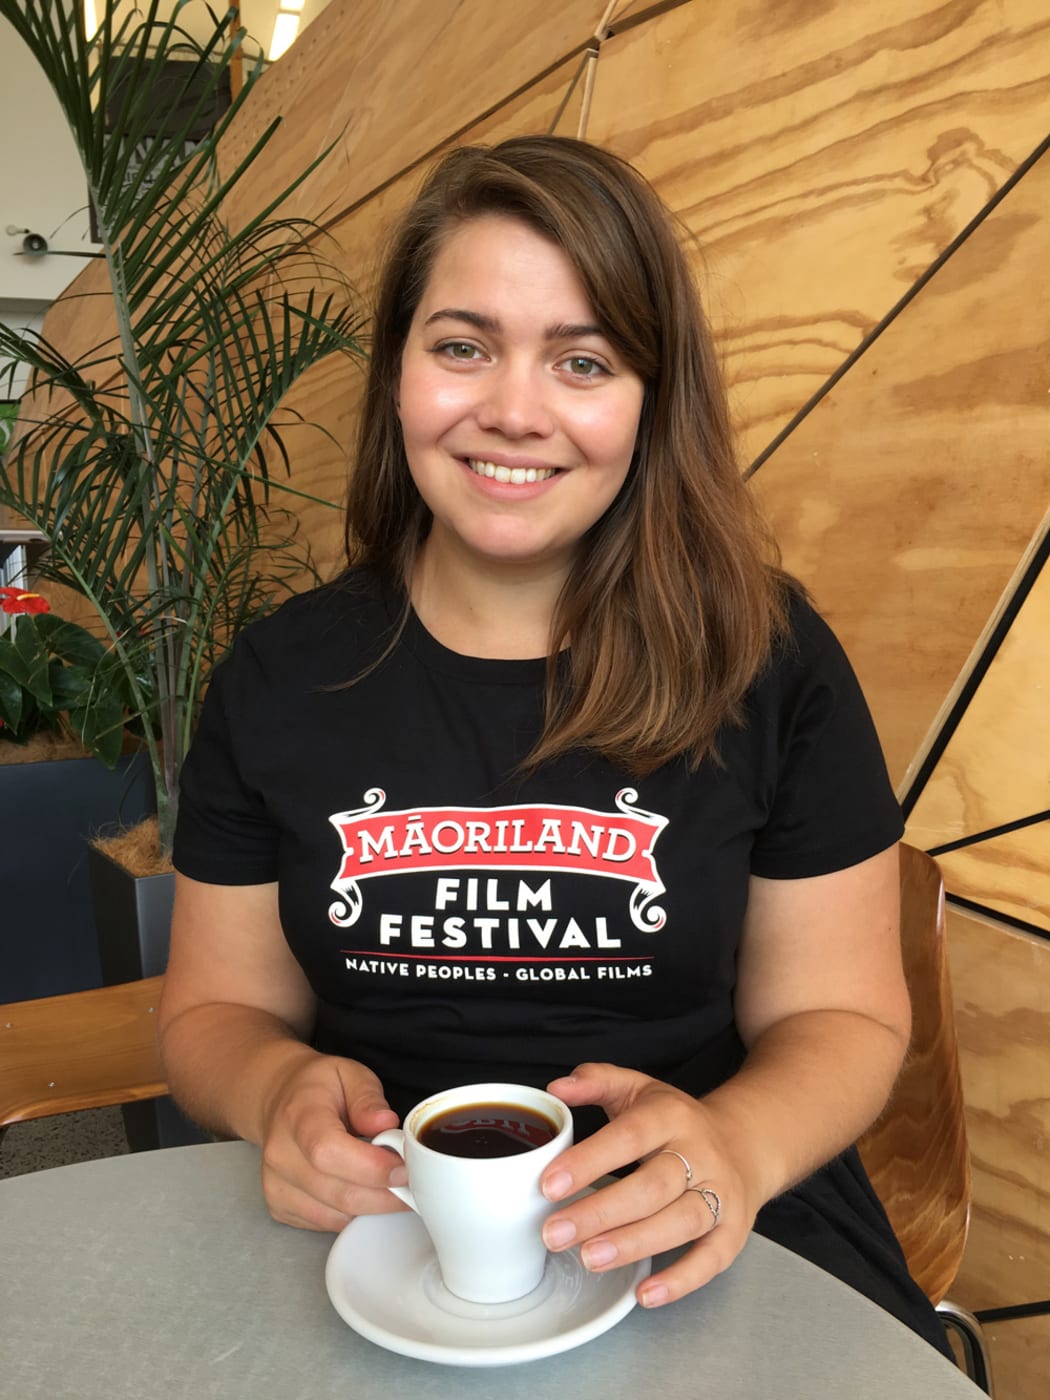 Maoriland Film Festival coordinator Madeleine de Young